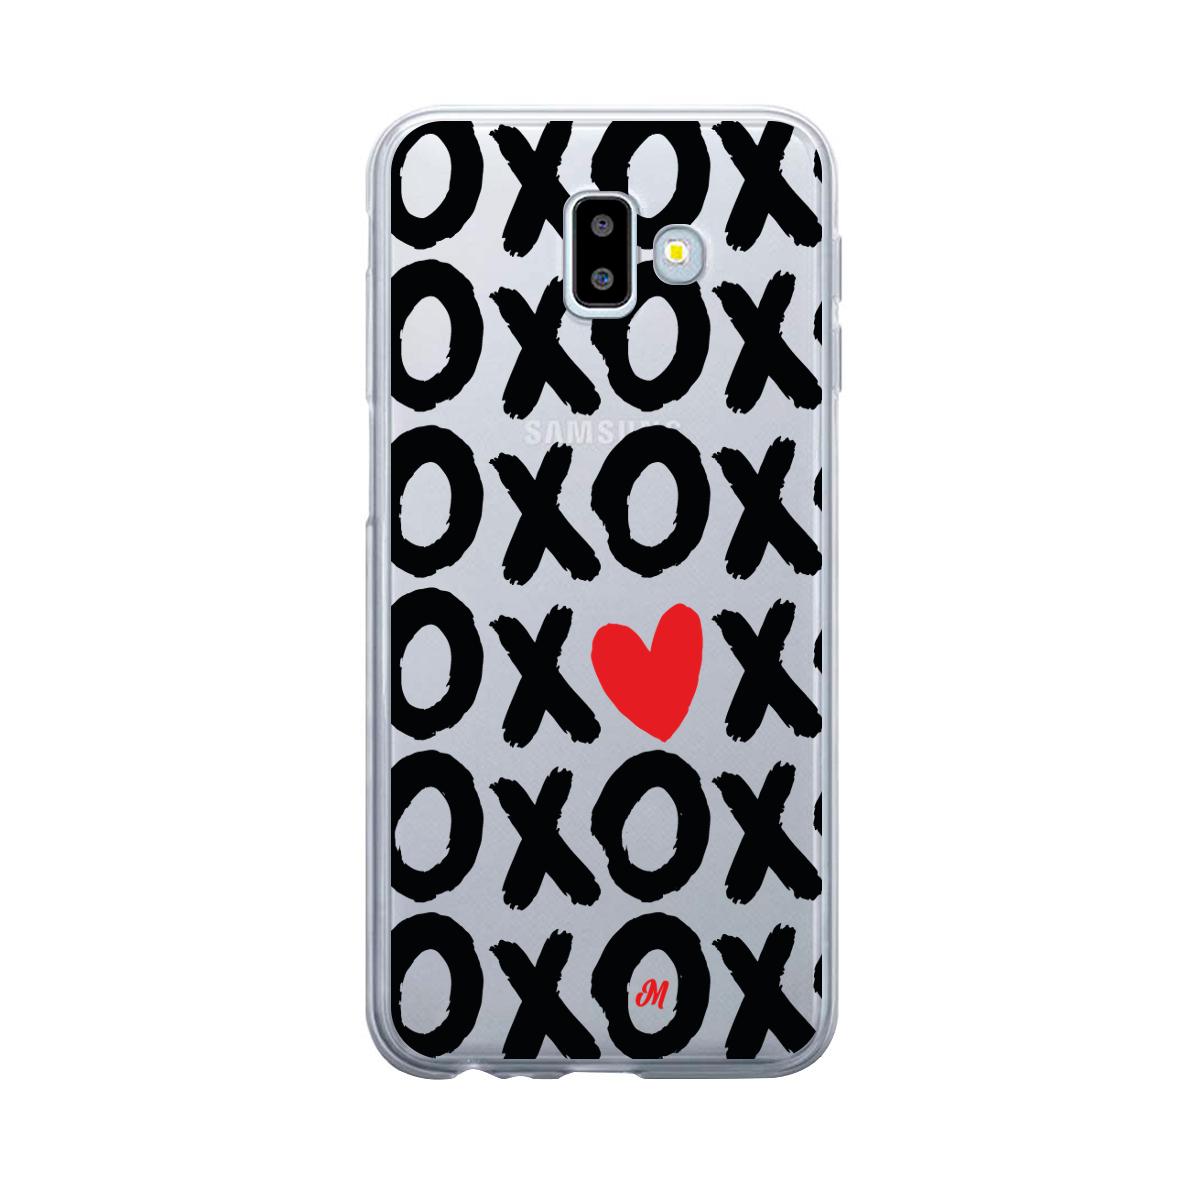 Case para Samsung J6 Plus OXOX Besos y Abrazos - Mandala Cases